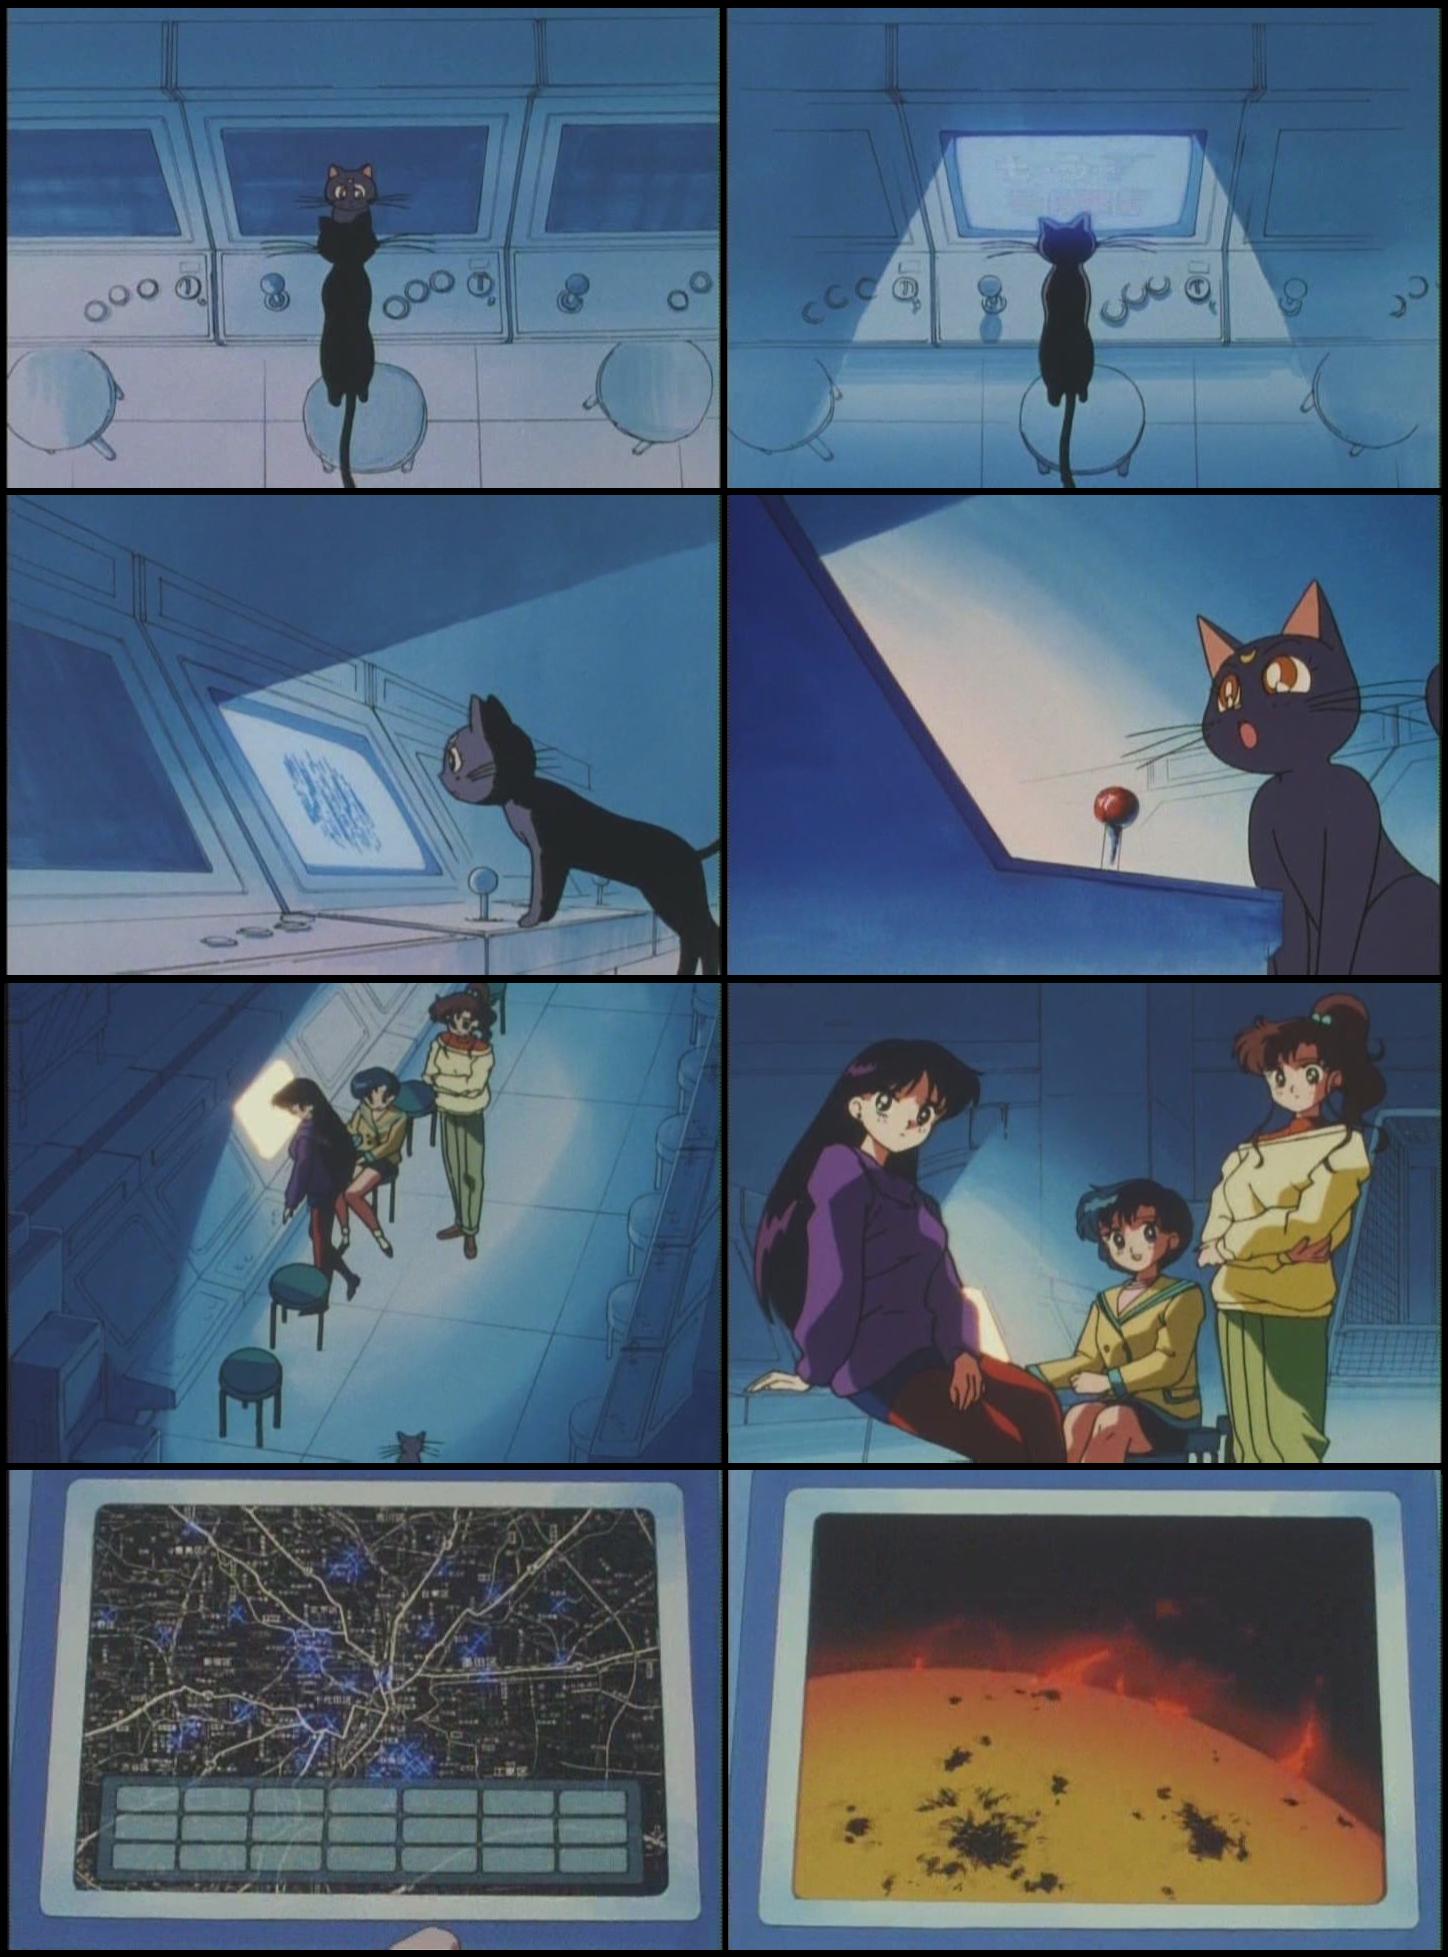 Secret Base (Original 1992 Anime) by Moon-Shadow-1985 on DeviantArt